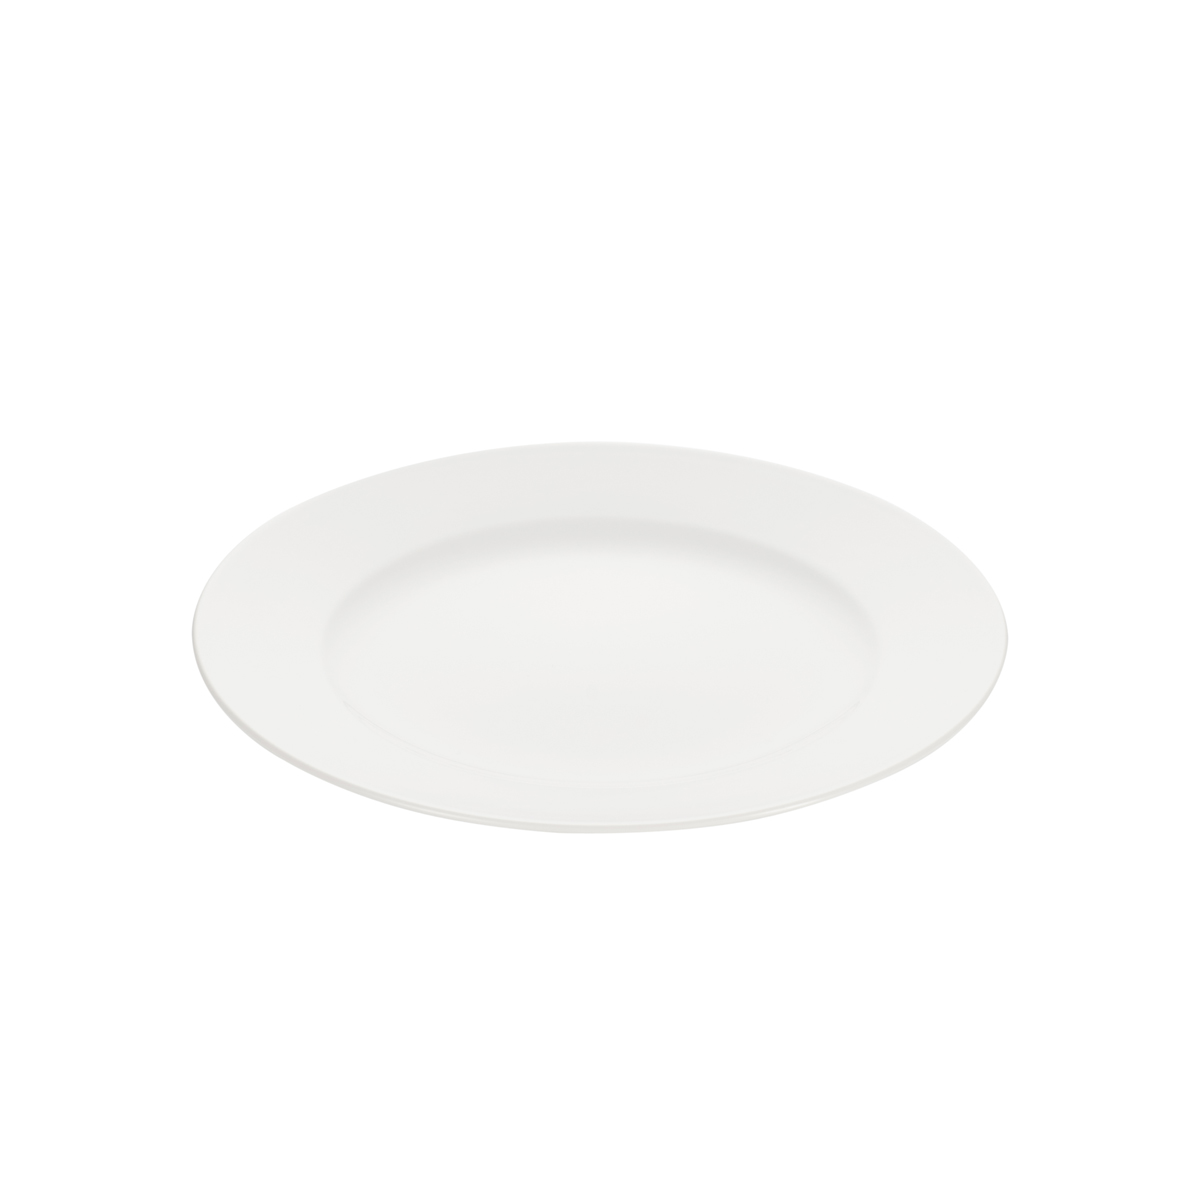 Плоская тарелка Gipfel Classique 50907 30 см плоская тарелка gipfel classique 50905 25 см